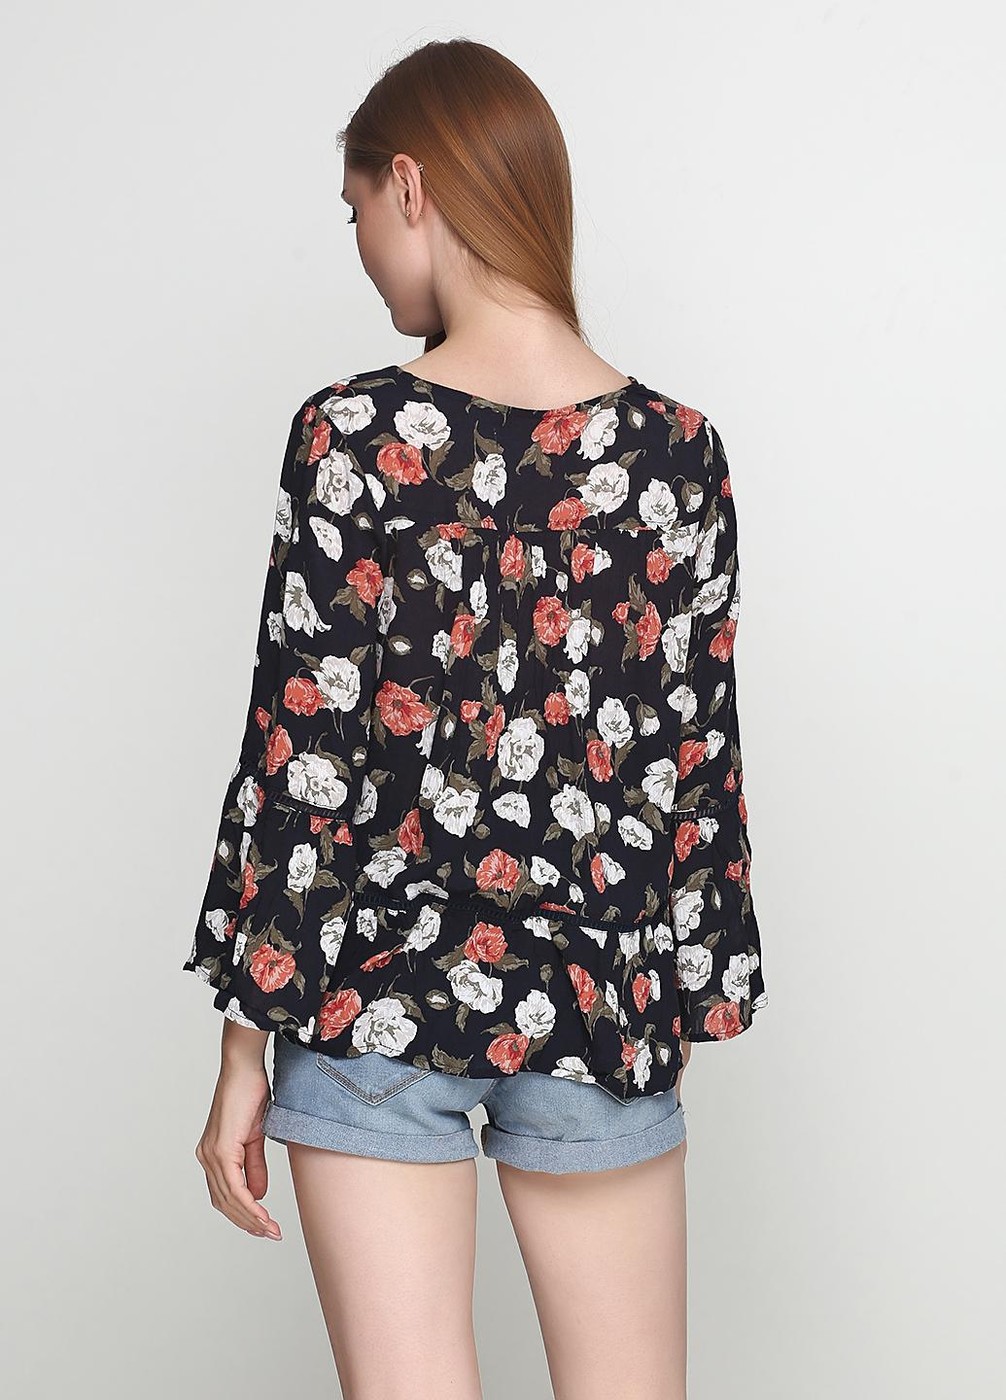 Женская блузка - блуза Abercrombie & Fitch, M, M